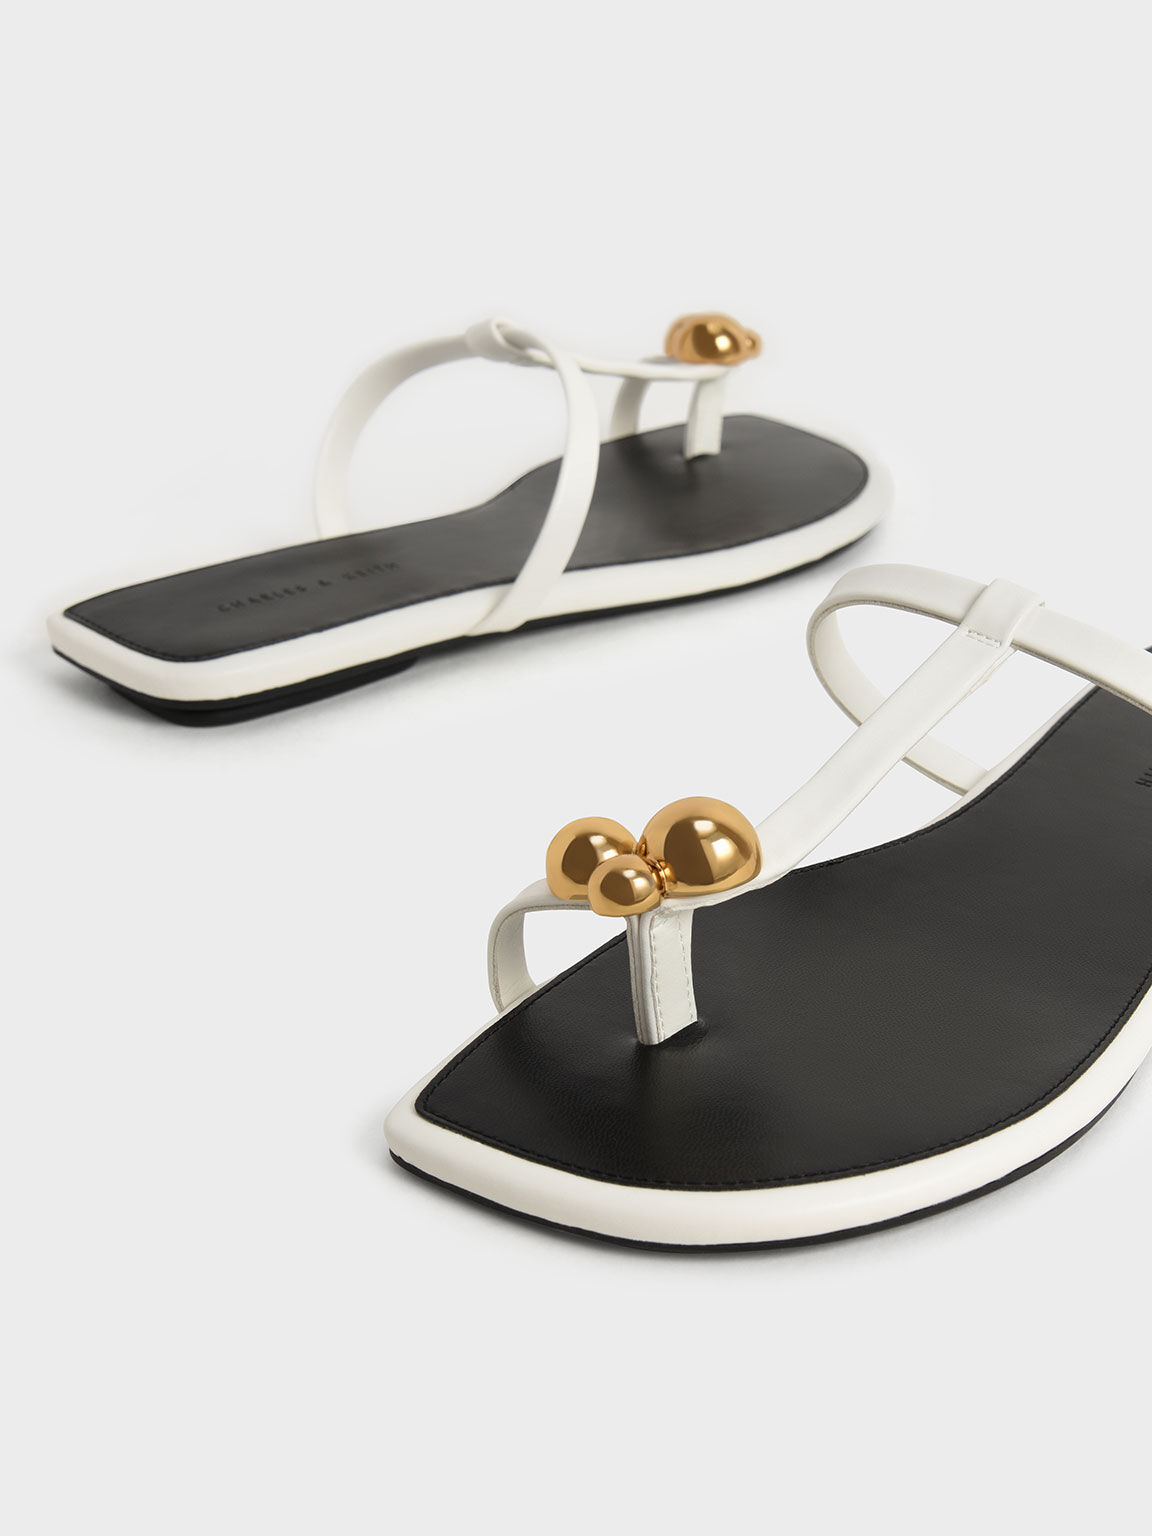 Sandal Flat Embellished Toe-Ring, White, hi-res